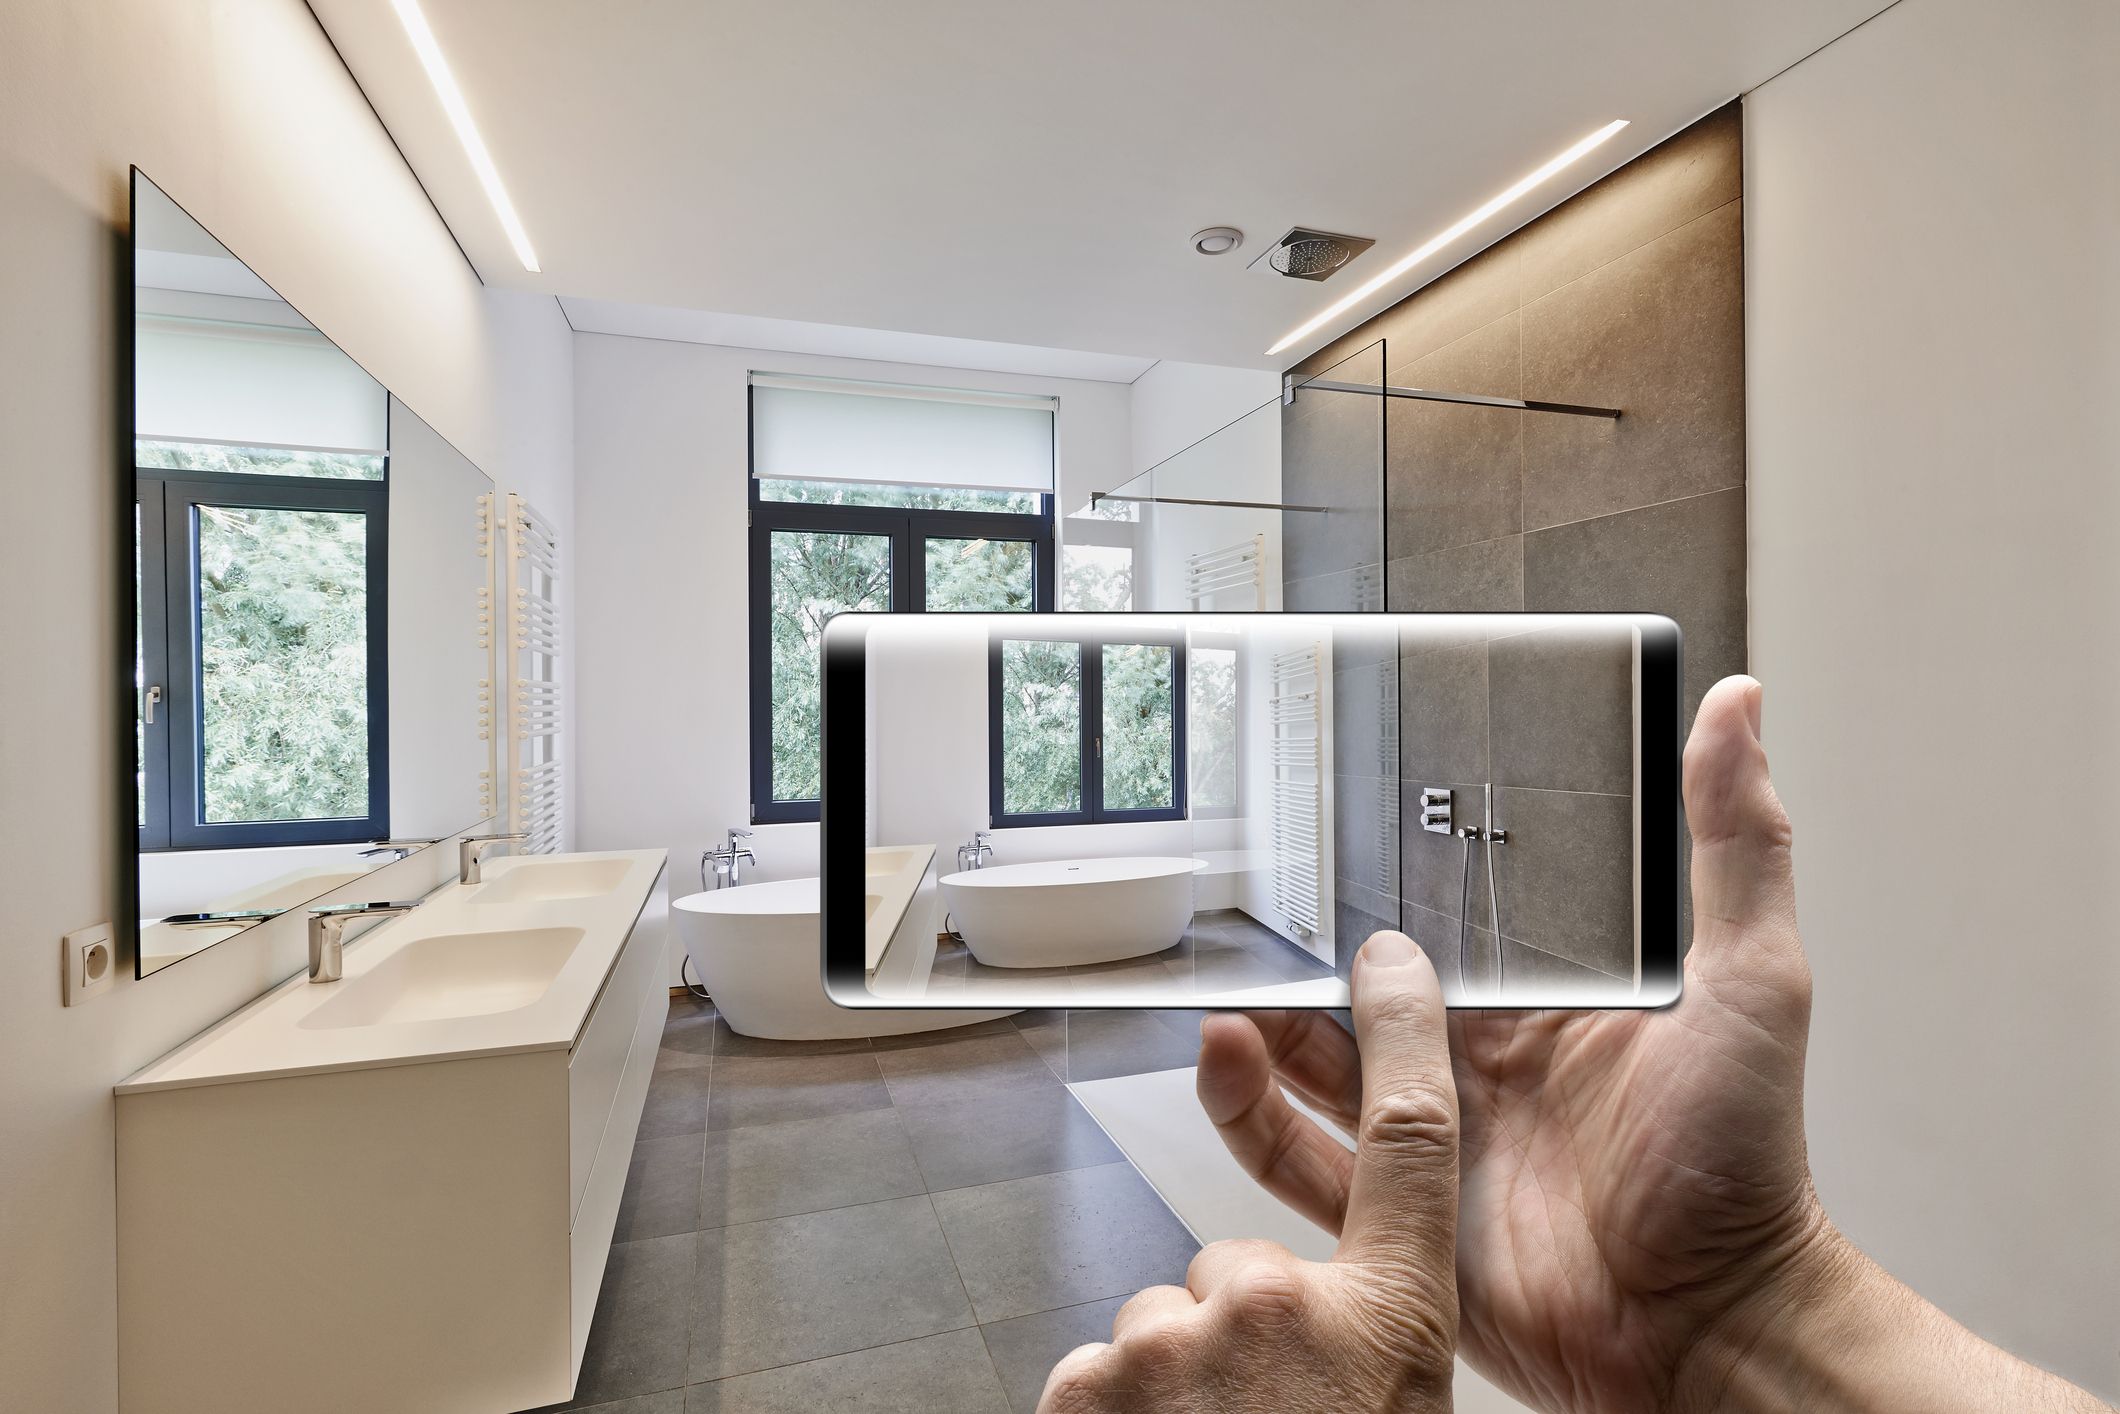 The Future of Smart Bathroom Technology